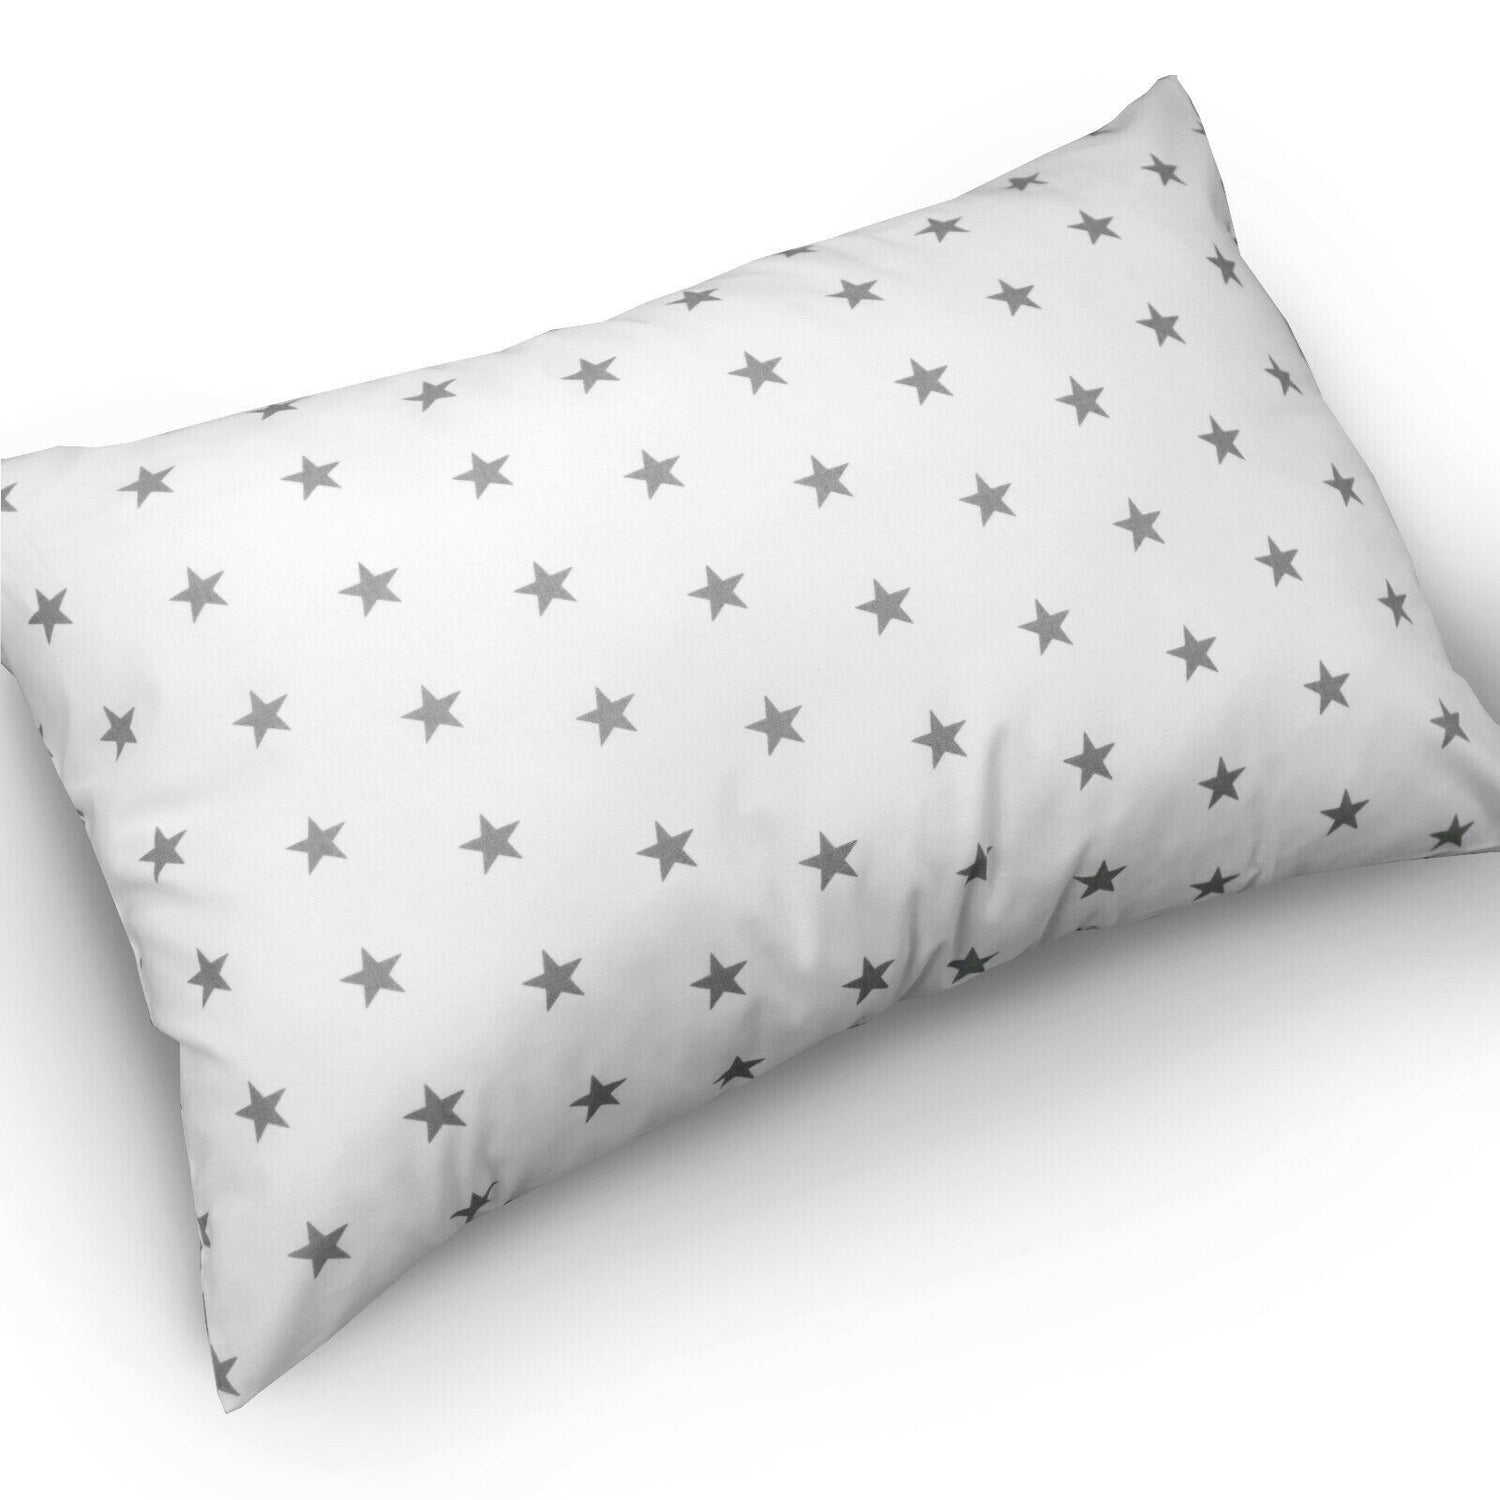 Pillow case ANTI-ALLERGENIC with zipper closure 60x40cm Cotton Small grey stars